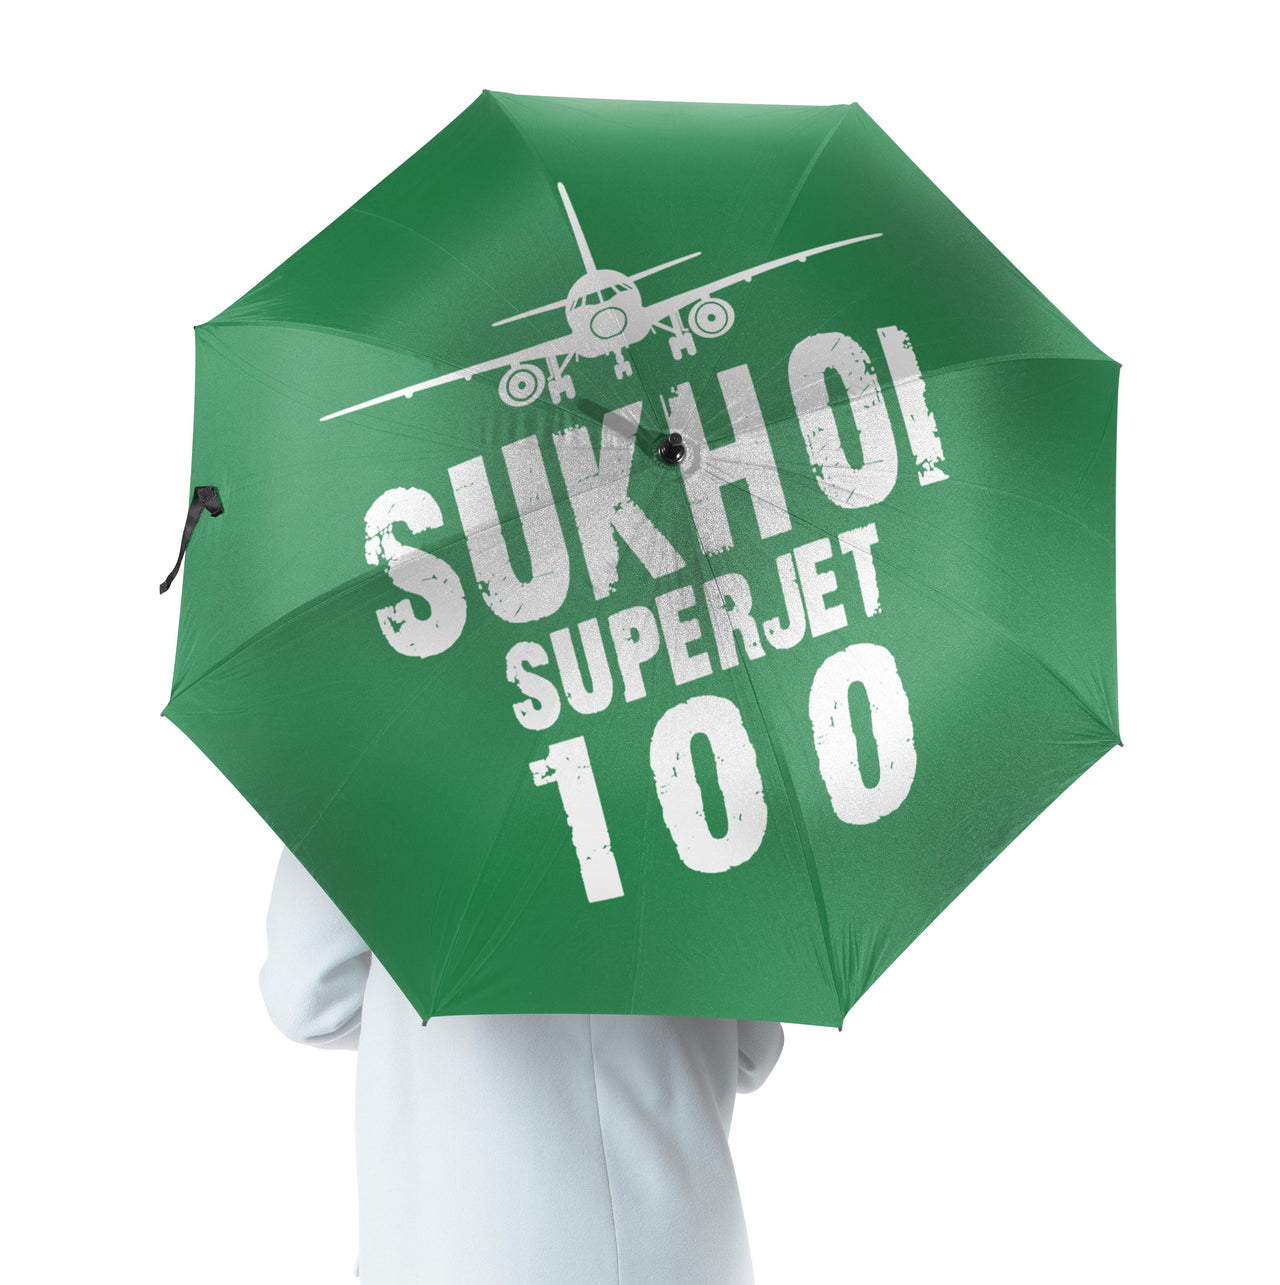 Sukhoi Superjet 100 & Plane Designed Umbrella